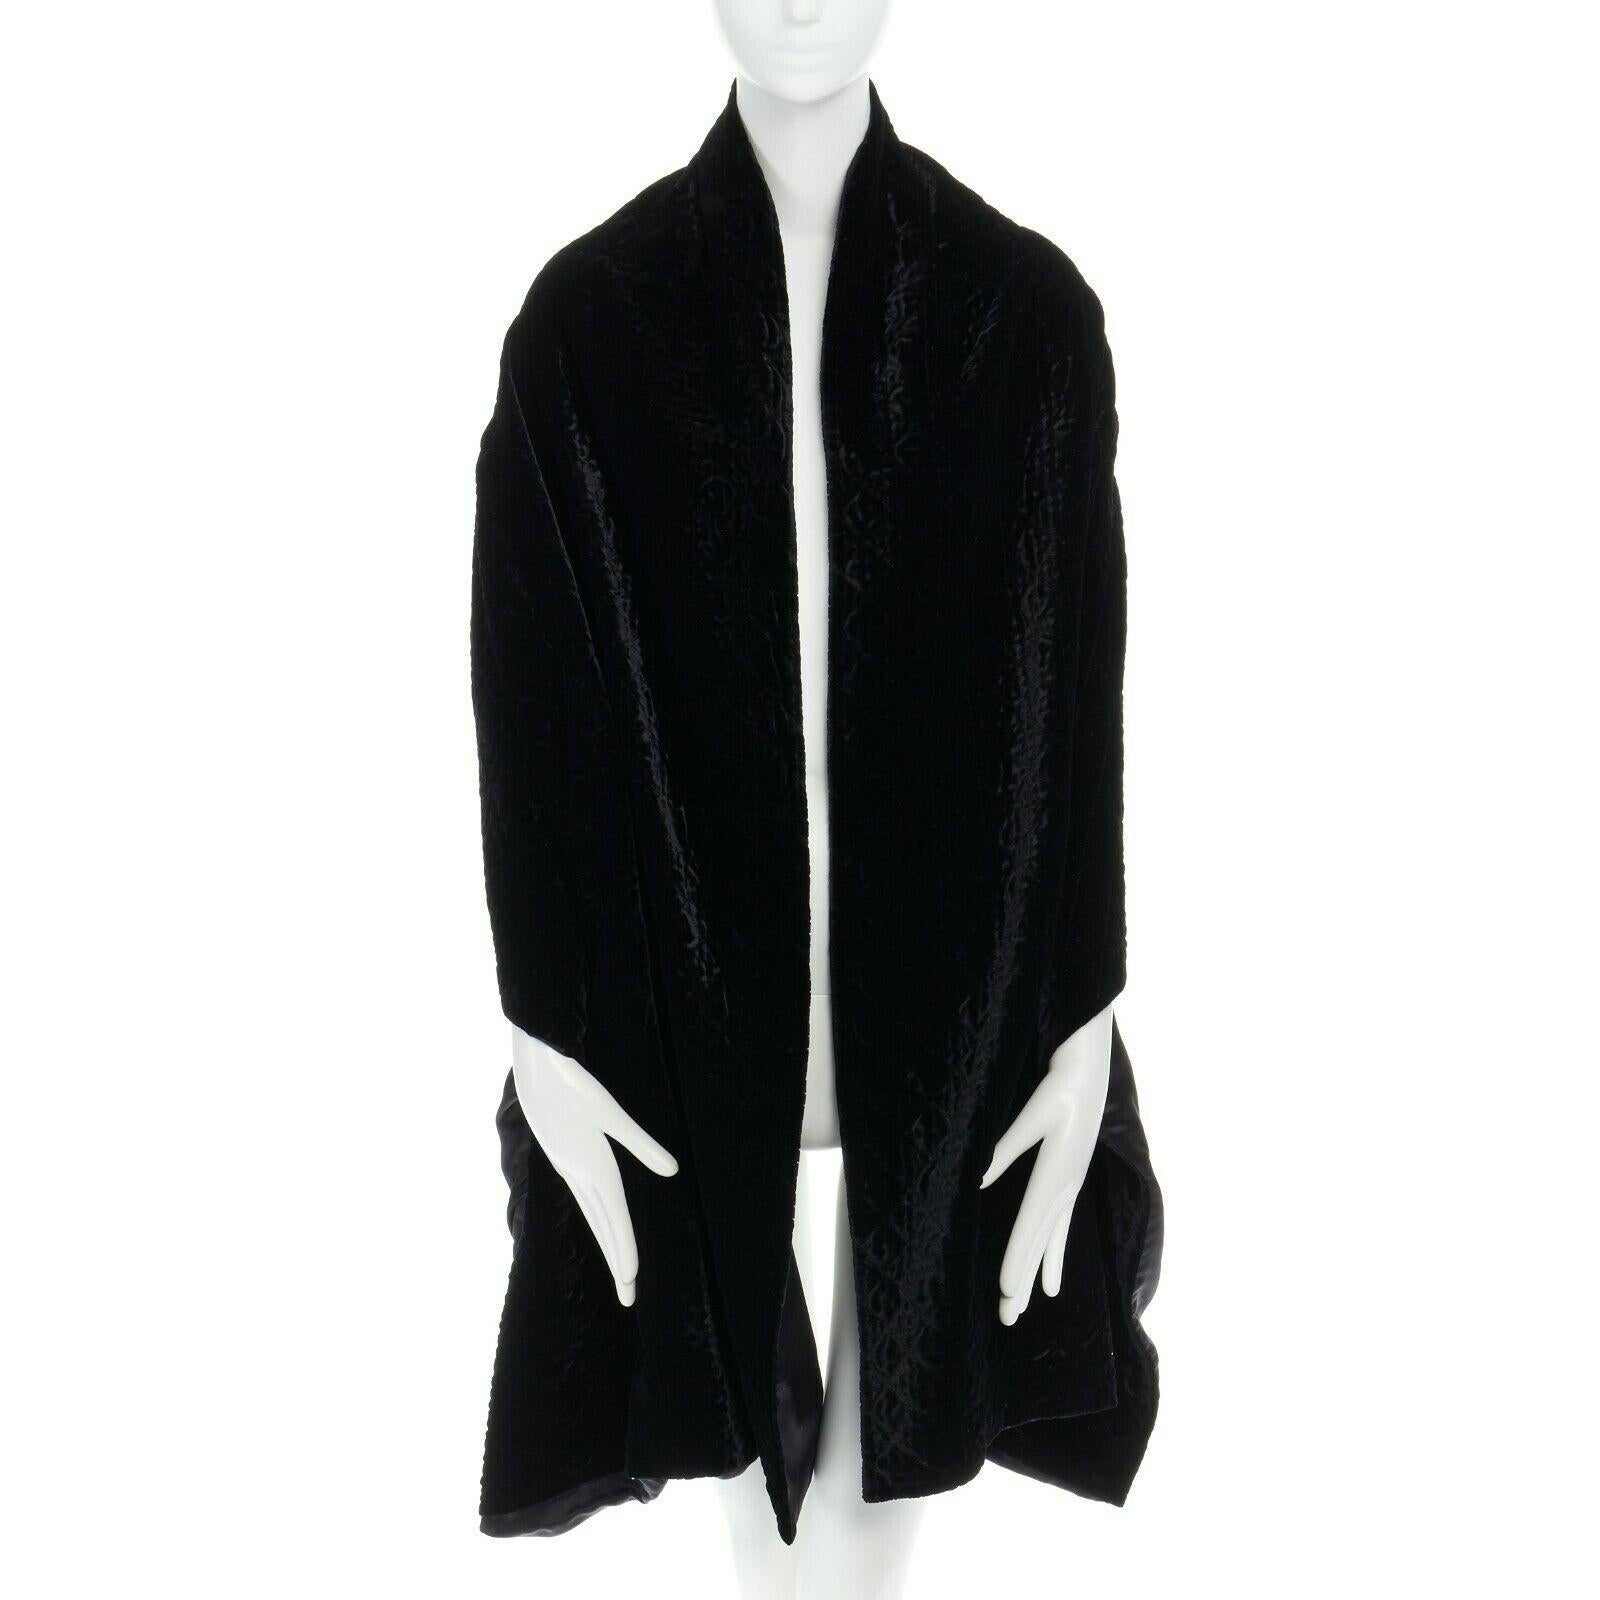 CHRISTIAN DIOR black velvet cannage geometric stitch silk lined shawl scarf
CHRISTIAN DIOR
Silk, viscose. 
Black velvet. 
Tonal signature Dior Cannage geometric stitching. 
100% silk lining. 
Oversized shawl scarf.

CONDITION:
Very good, this item